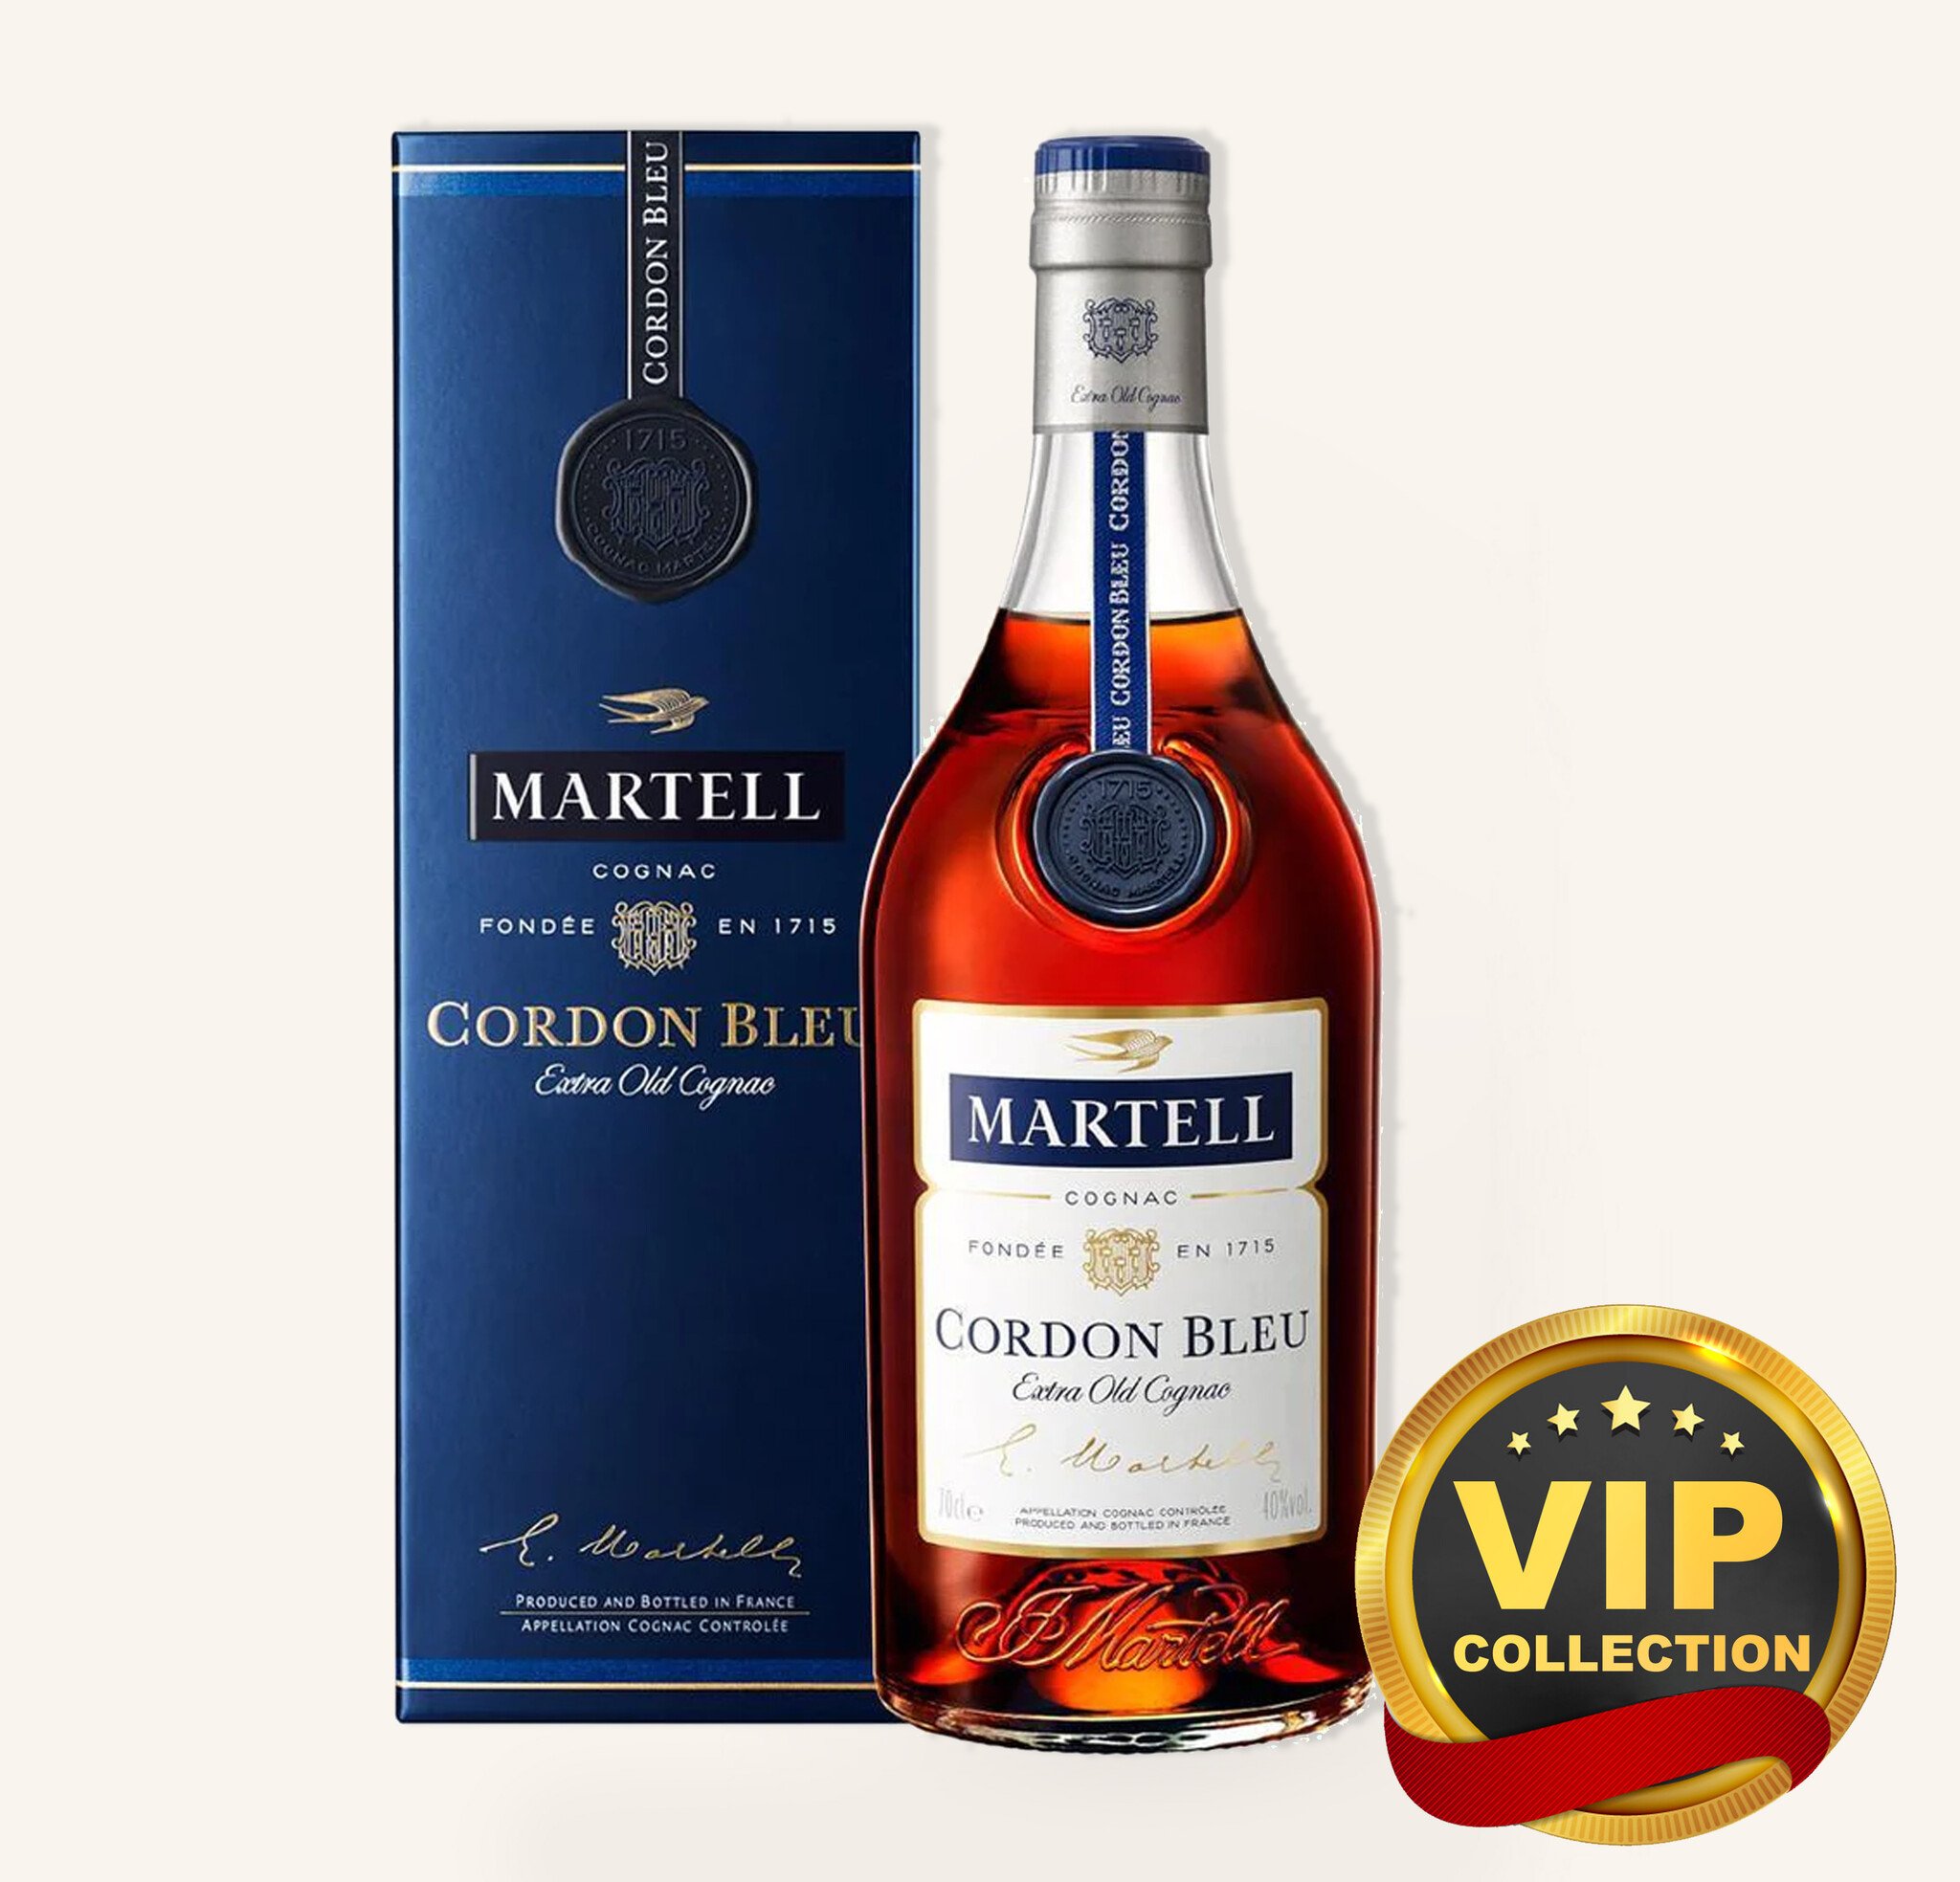 Martell Cordon Bleu Cognac 750ml $178 FREE DELIVERY